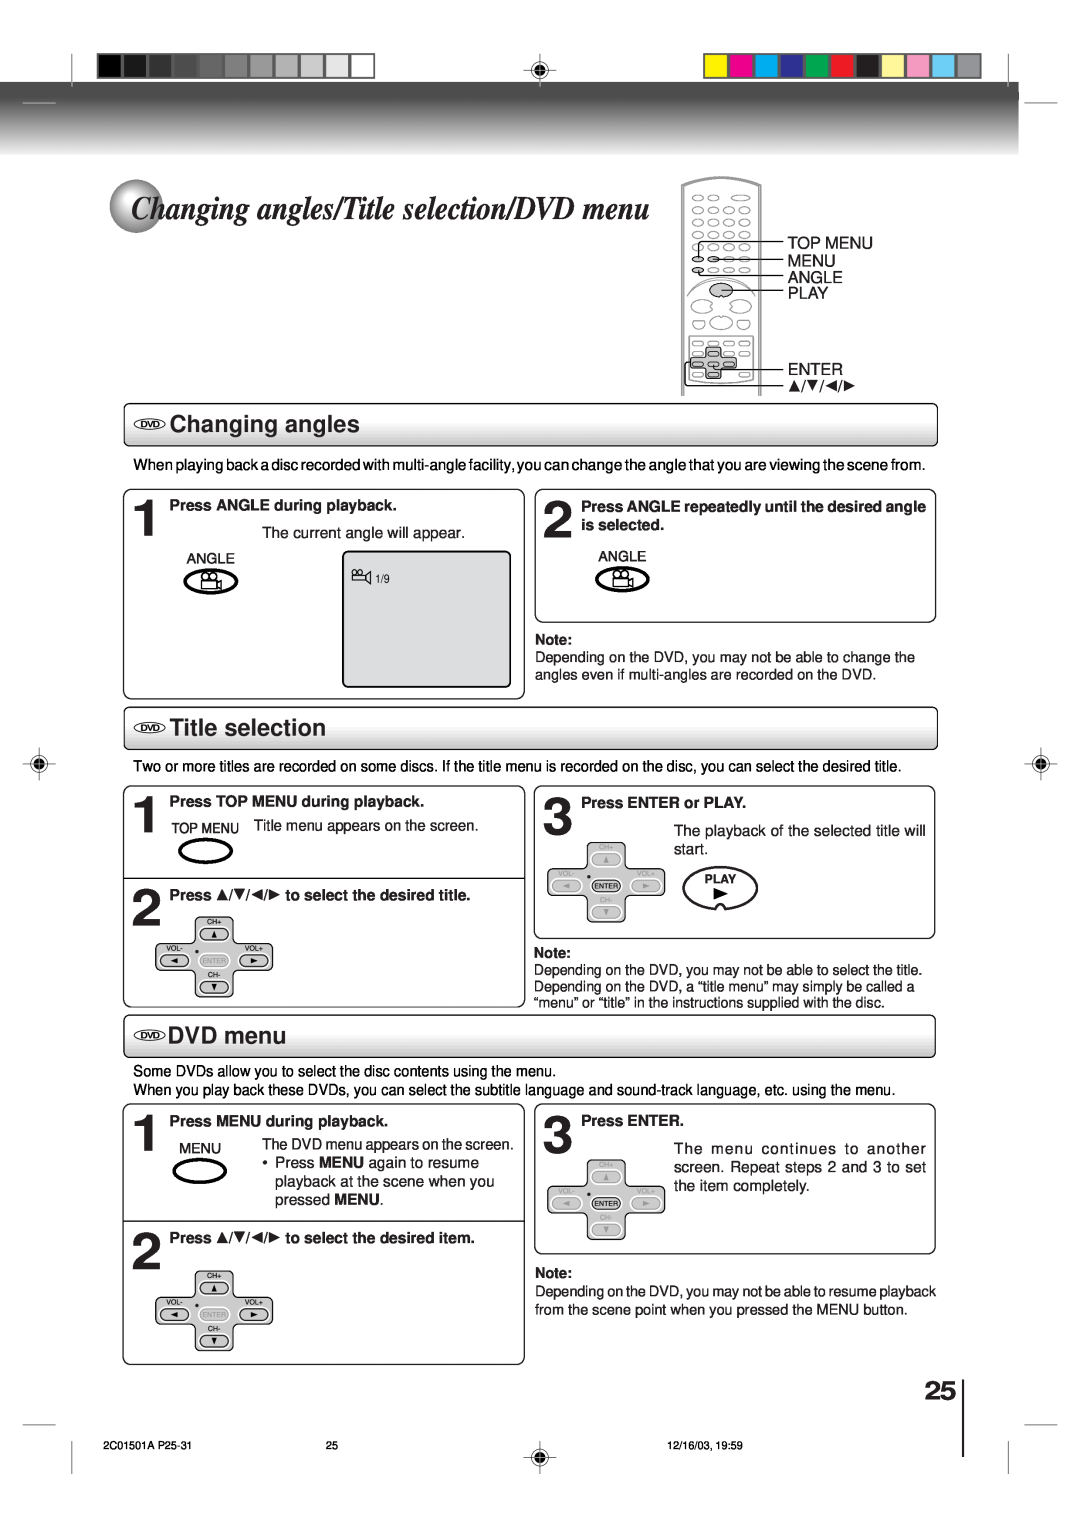 Toshiba SD-K740SU Changing angles/Title selection/DVD menu, DVD Changing angles, DVD Title selection, DVD DVD menu 